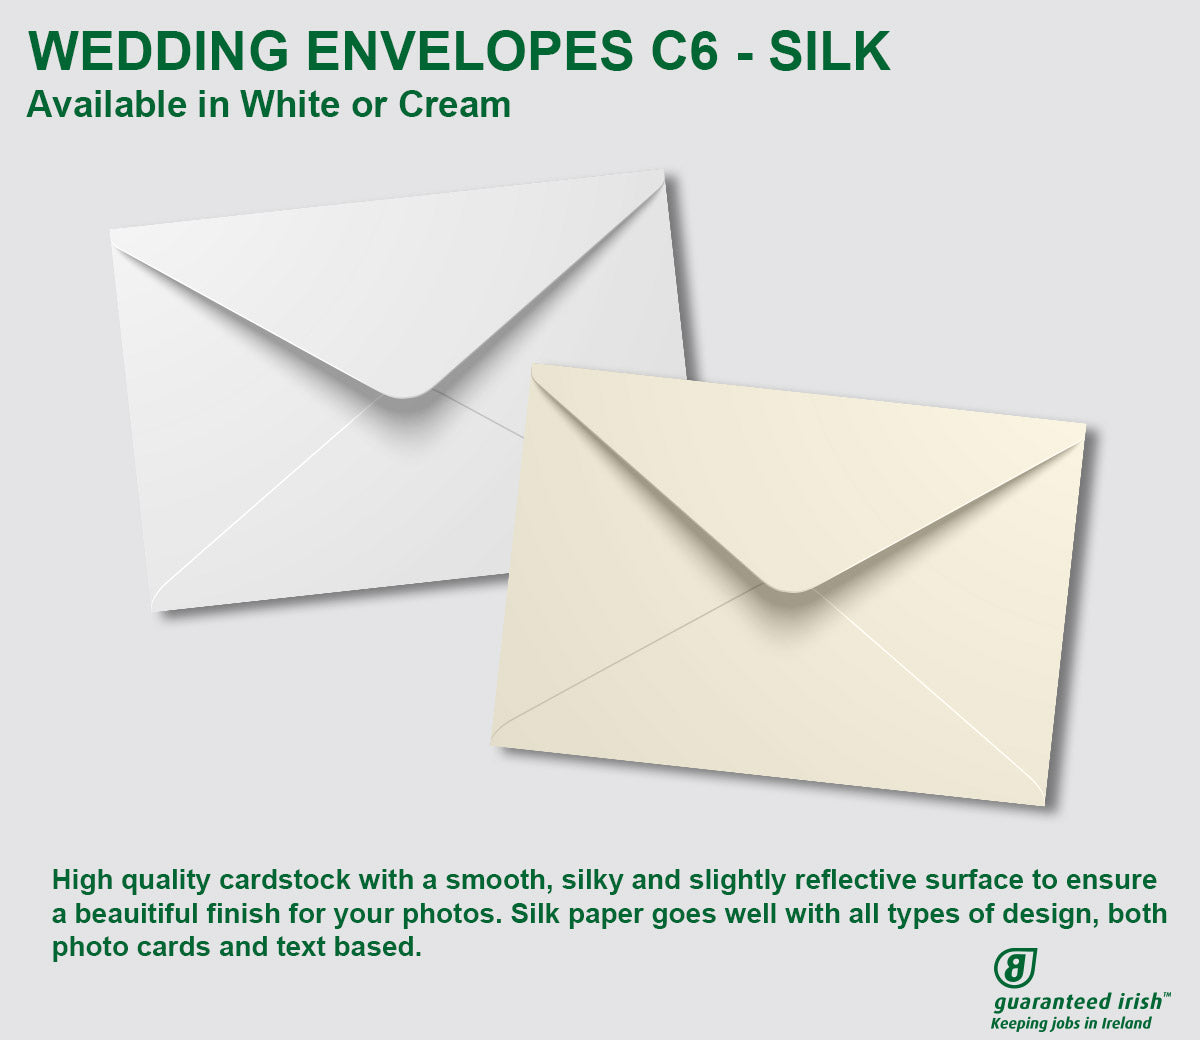 Wedding Envelopes C6 - Silk